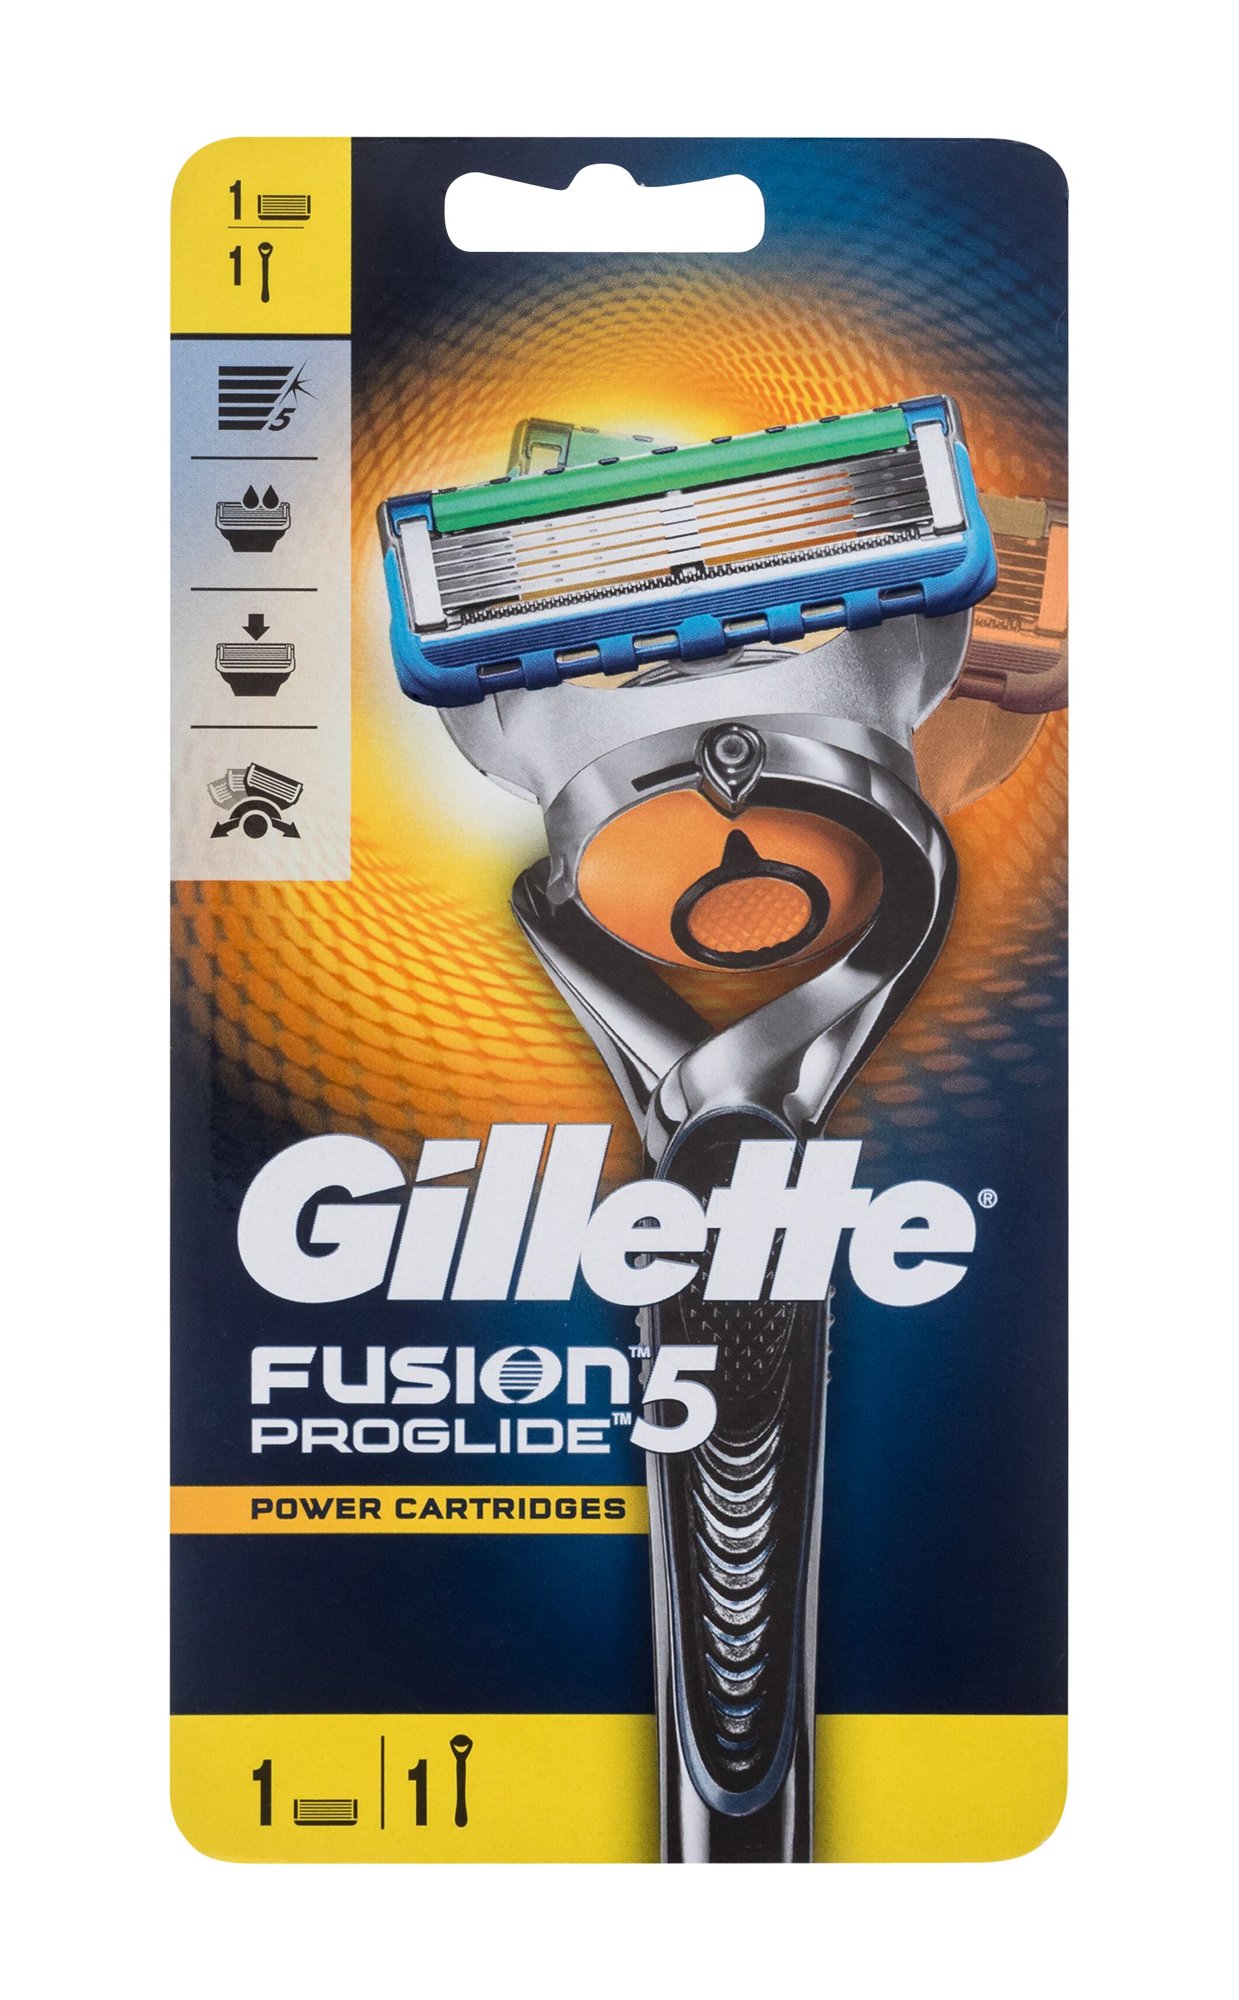 Gillette Fusion5 Proglide Power skustuvas